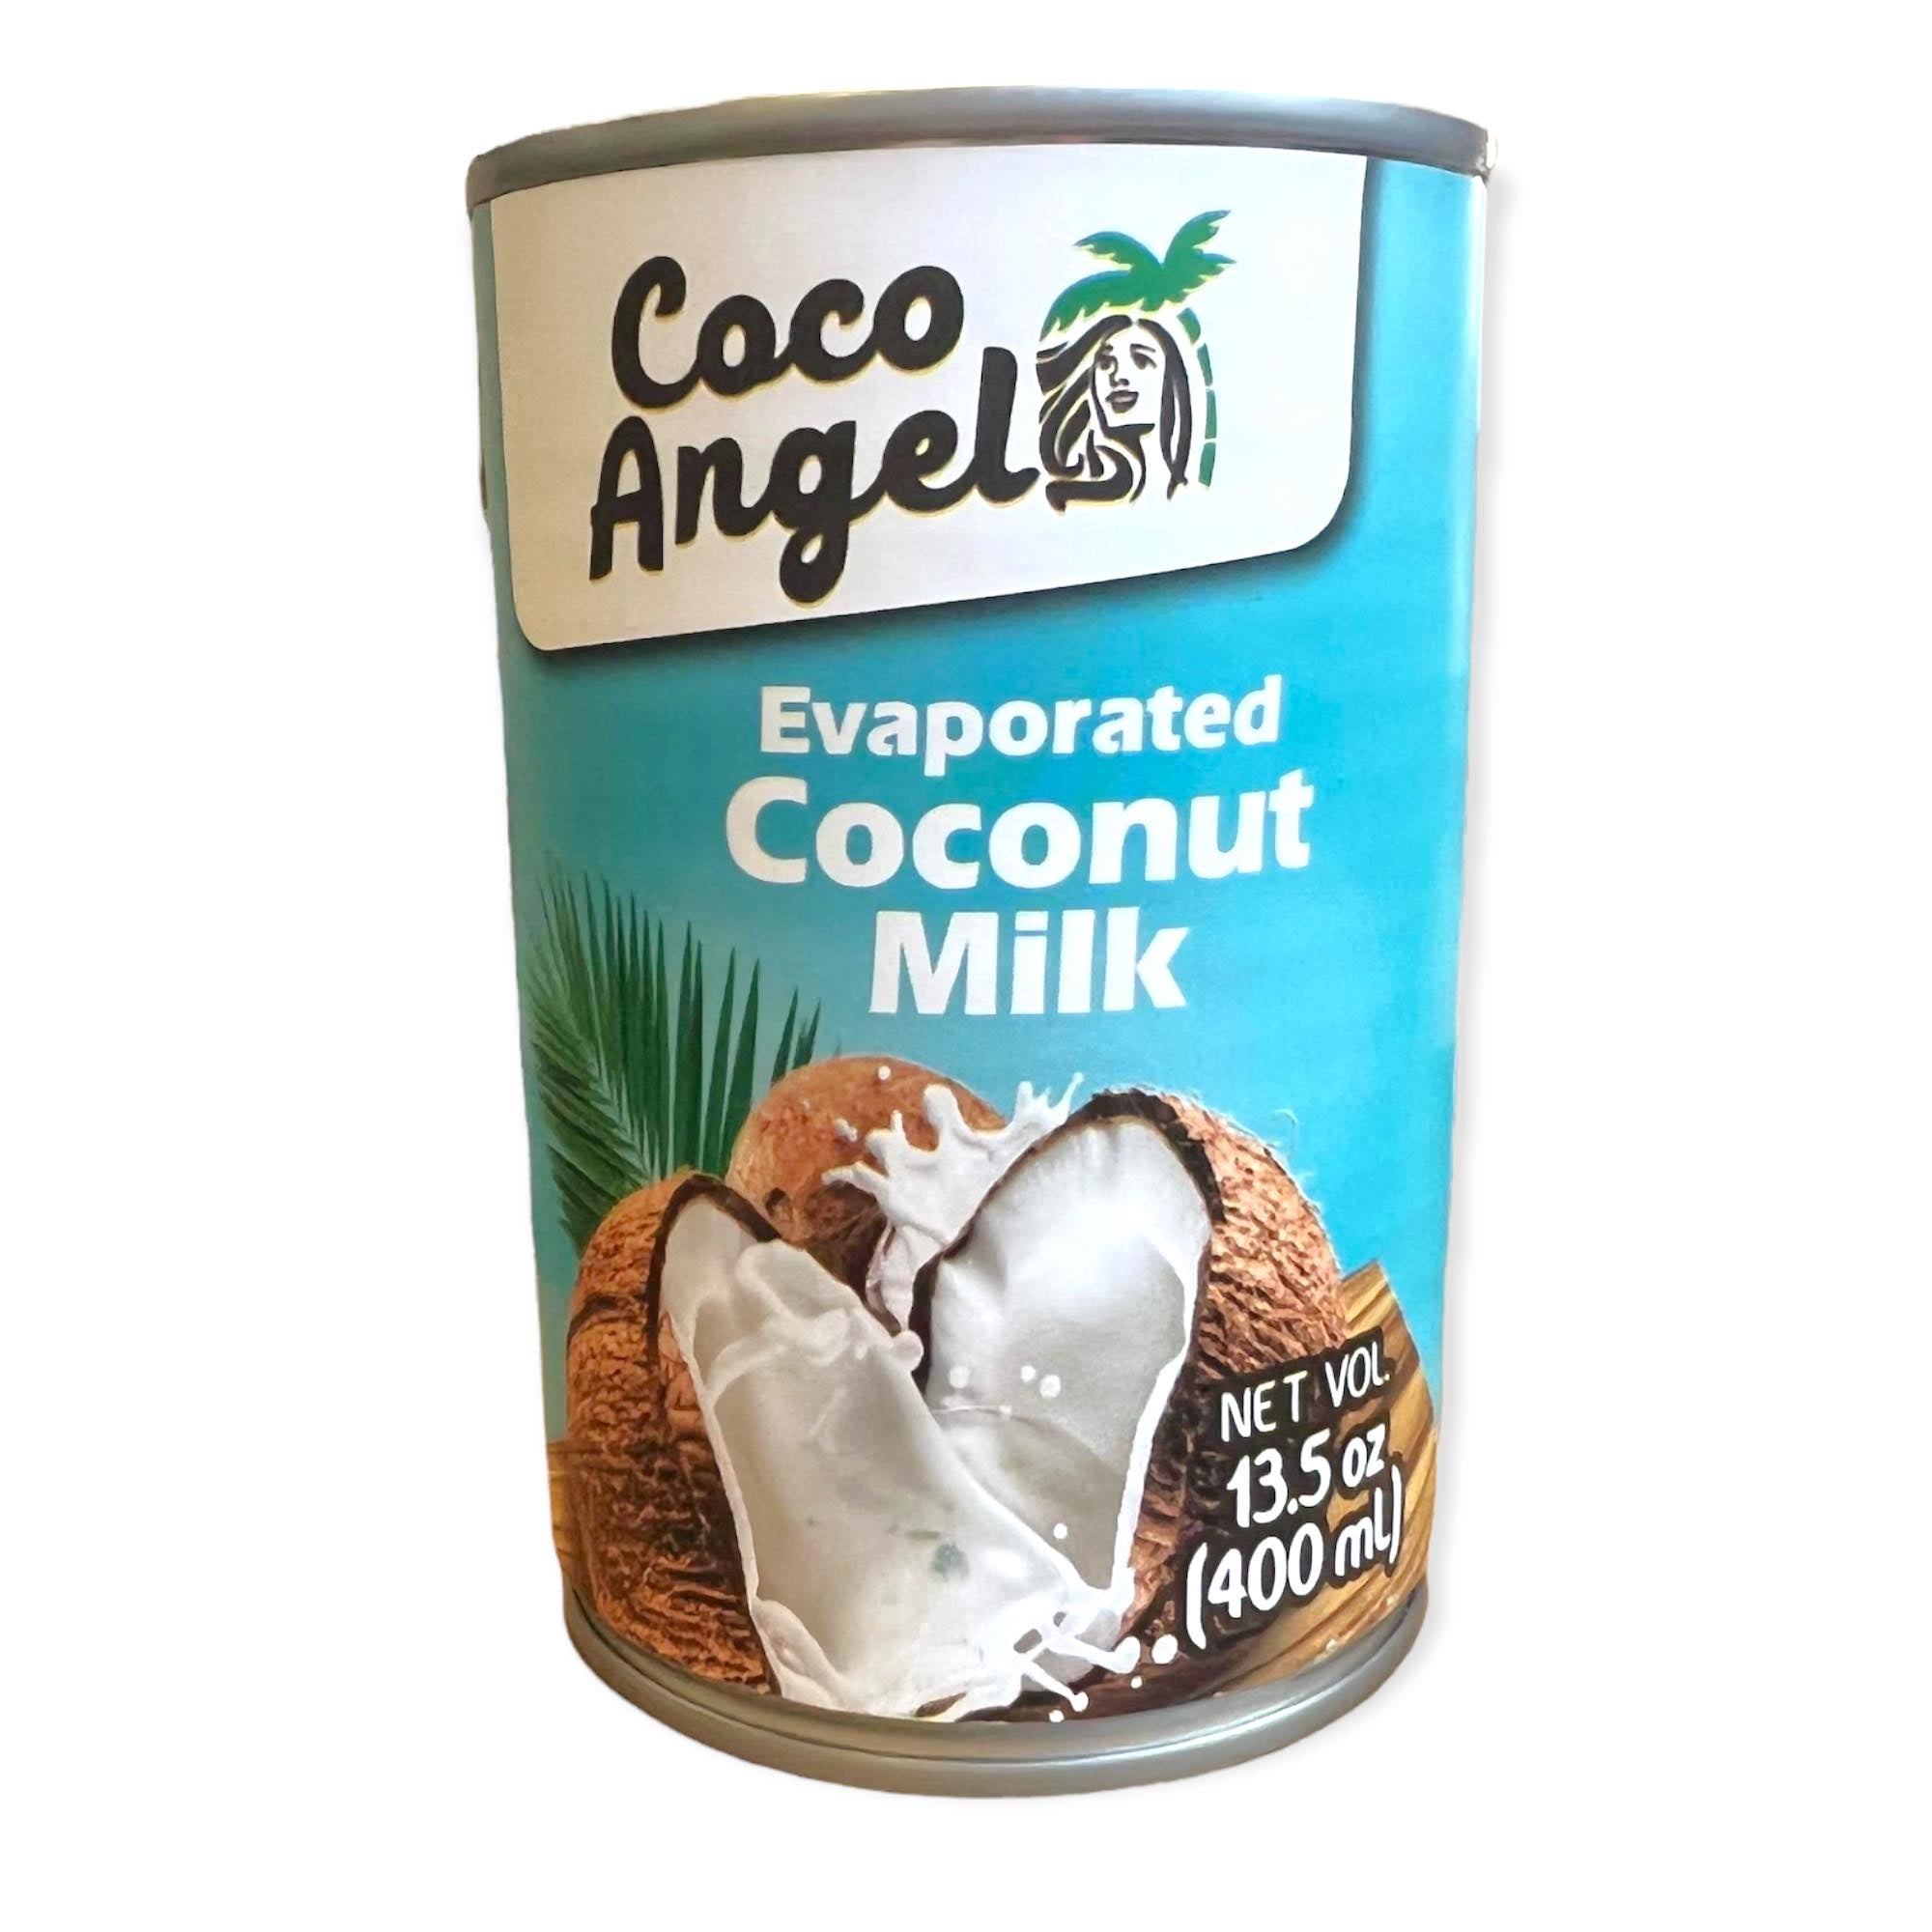 Coco Angel - Evaporated Coconut Milk - 400 ML